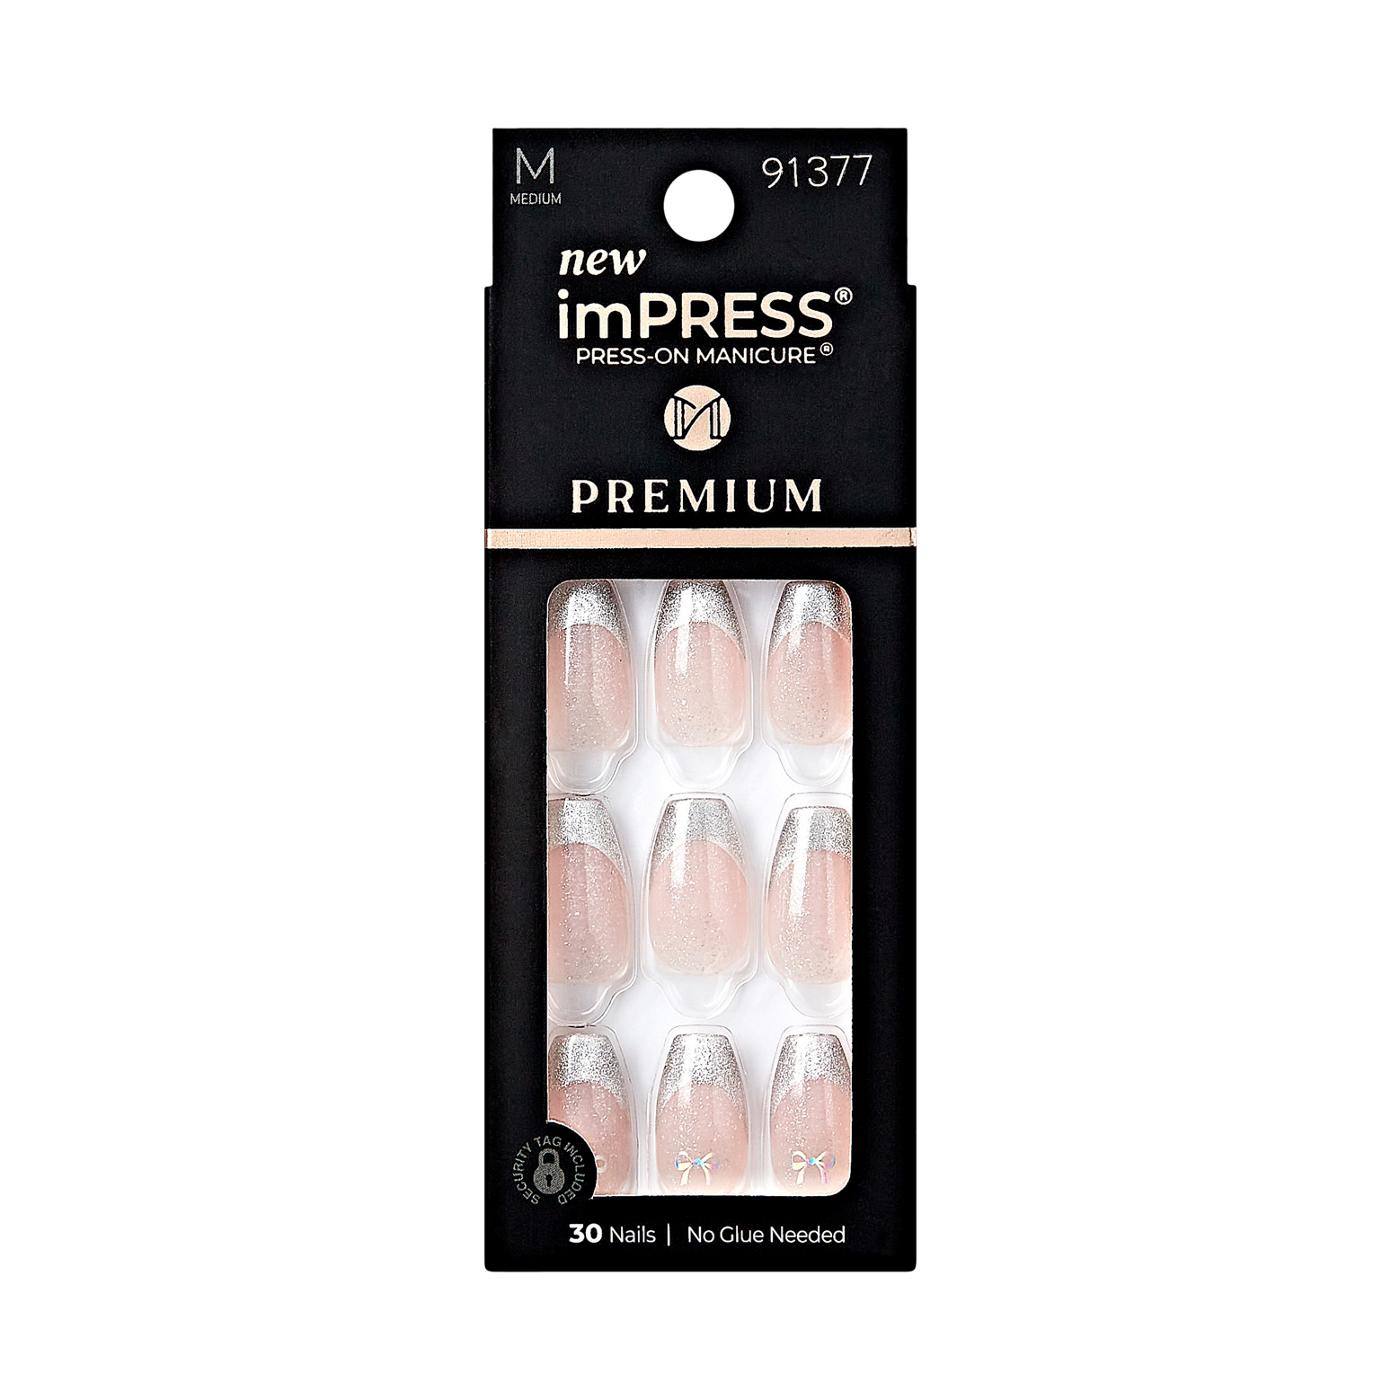 KISS imPRESS Press-On Premium  Manicure - Memory Lane; image 1 of 5